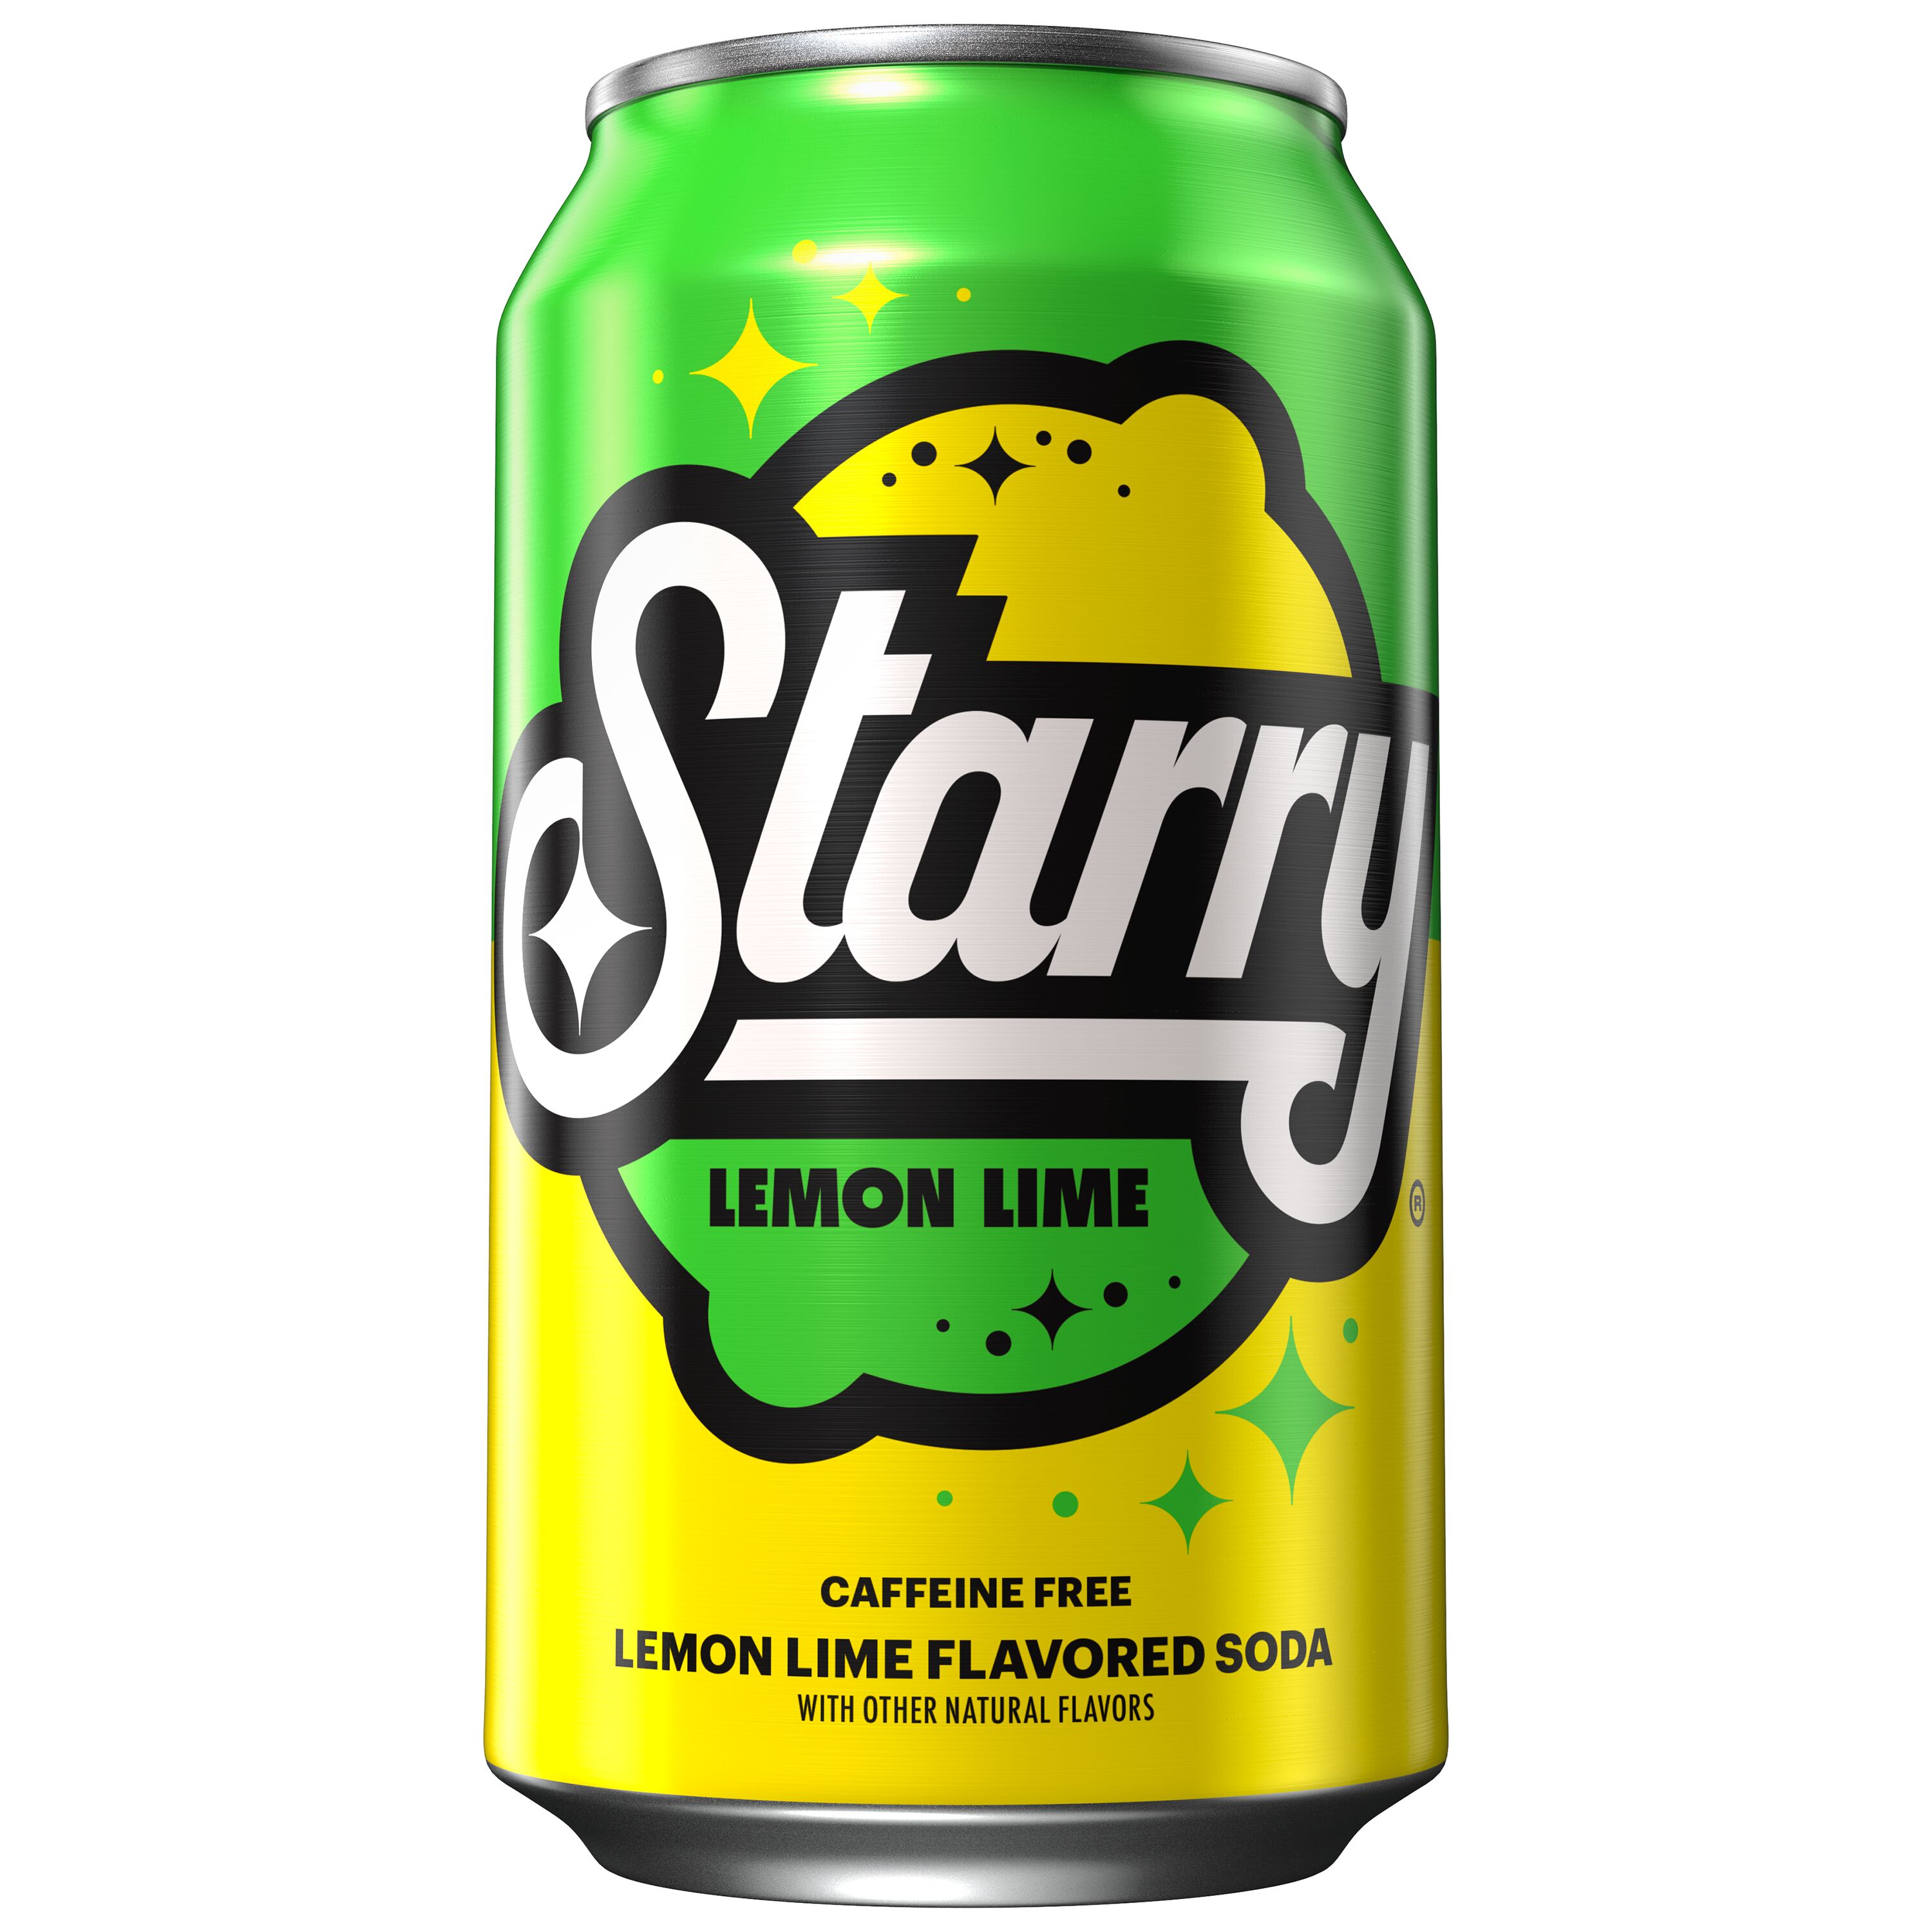 Starry, Lemon Lime Flavored Soda - SmartLabel™